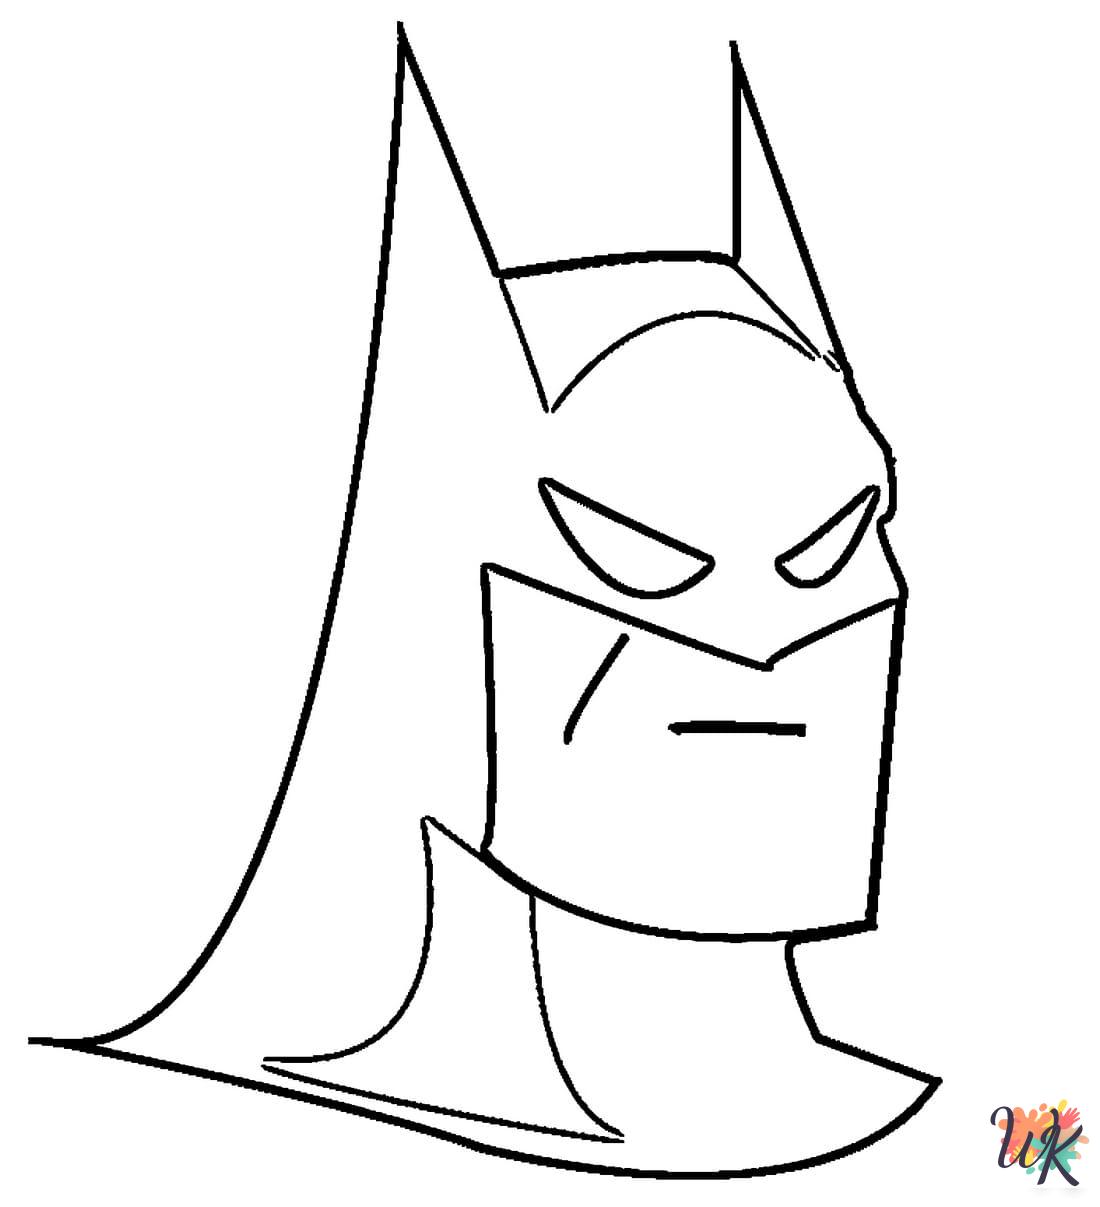 Batman coloring pages free printable